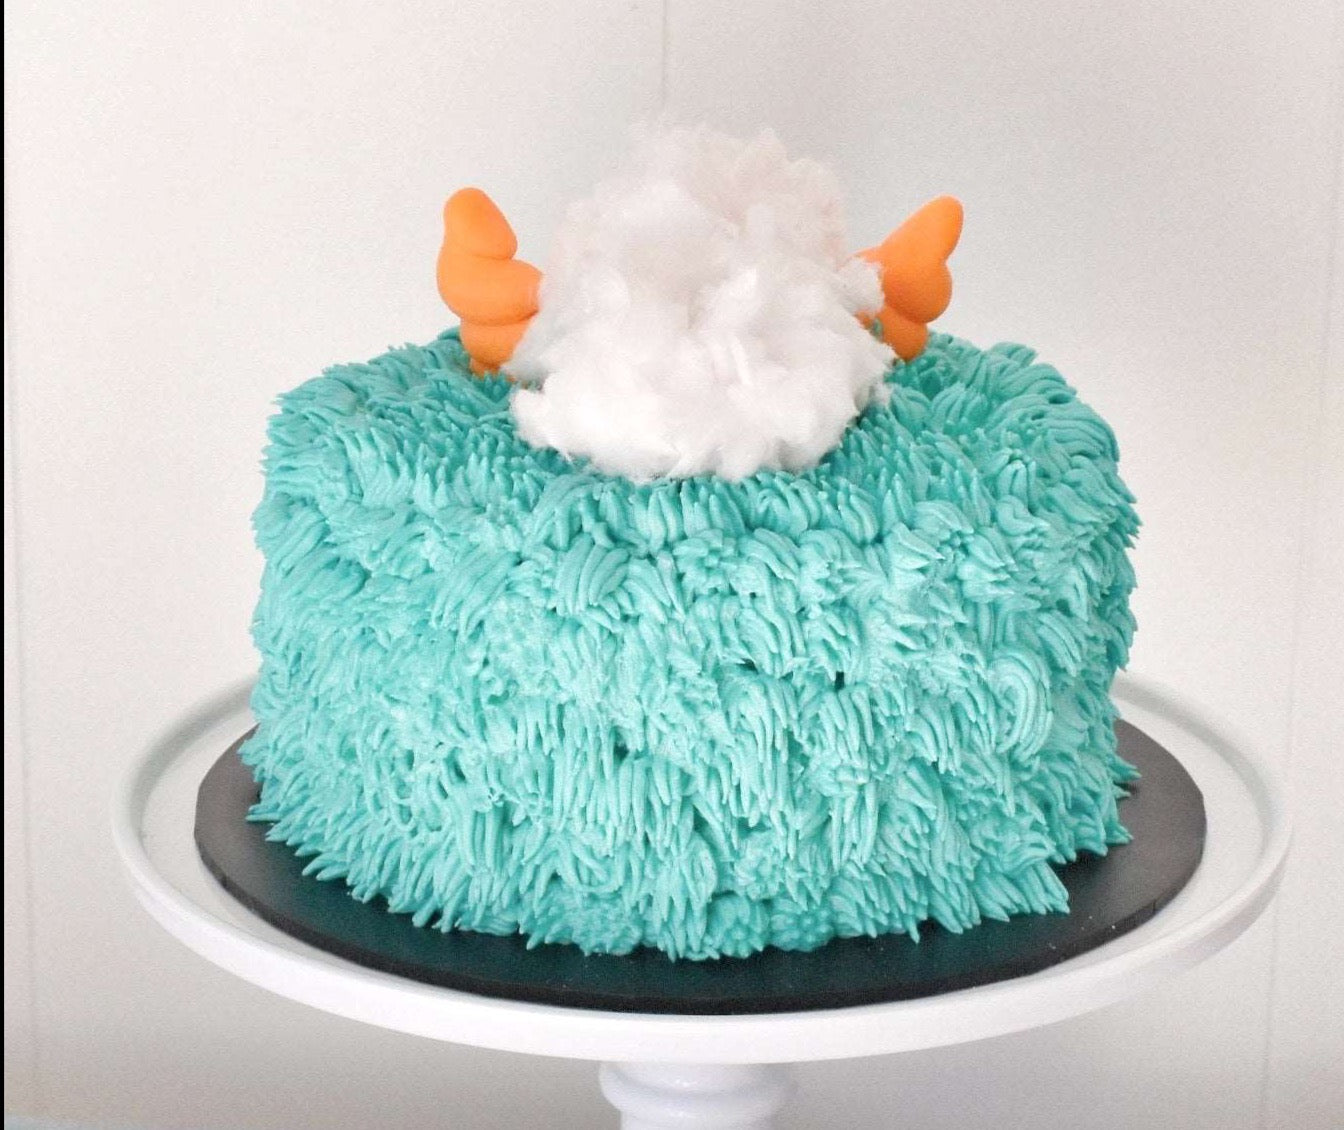 Clever Crumb Monster DIY Cake Kit, Blue Monster Cake, Crazy Creature Cake, Boys Birthday Cake, Monsters Inc Cake